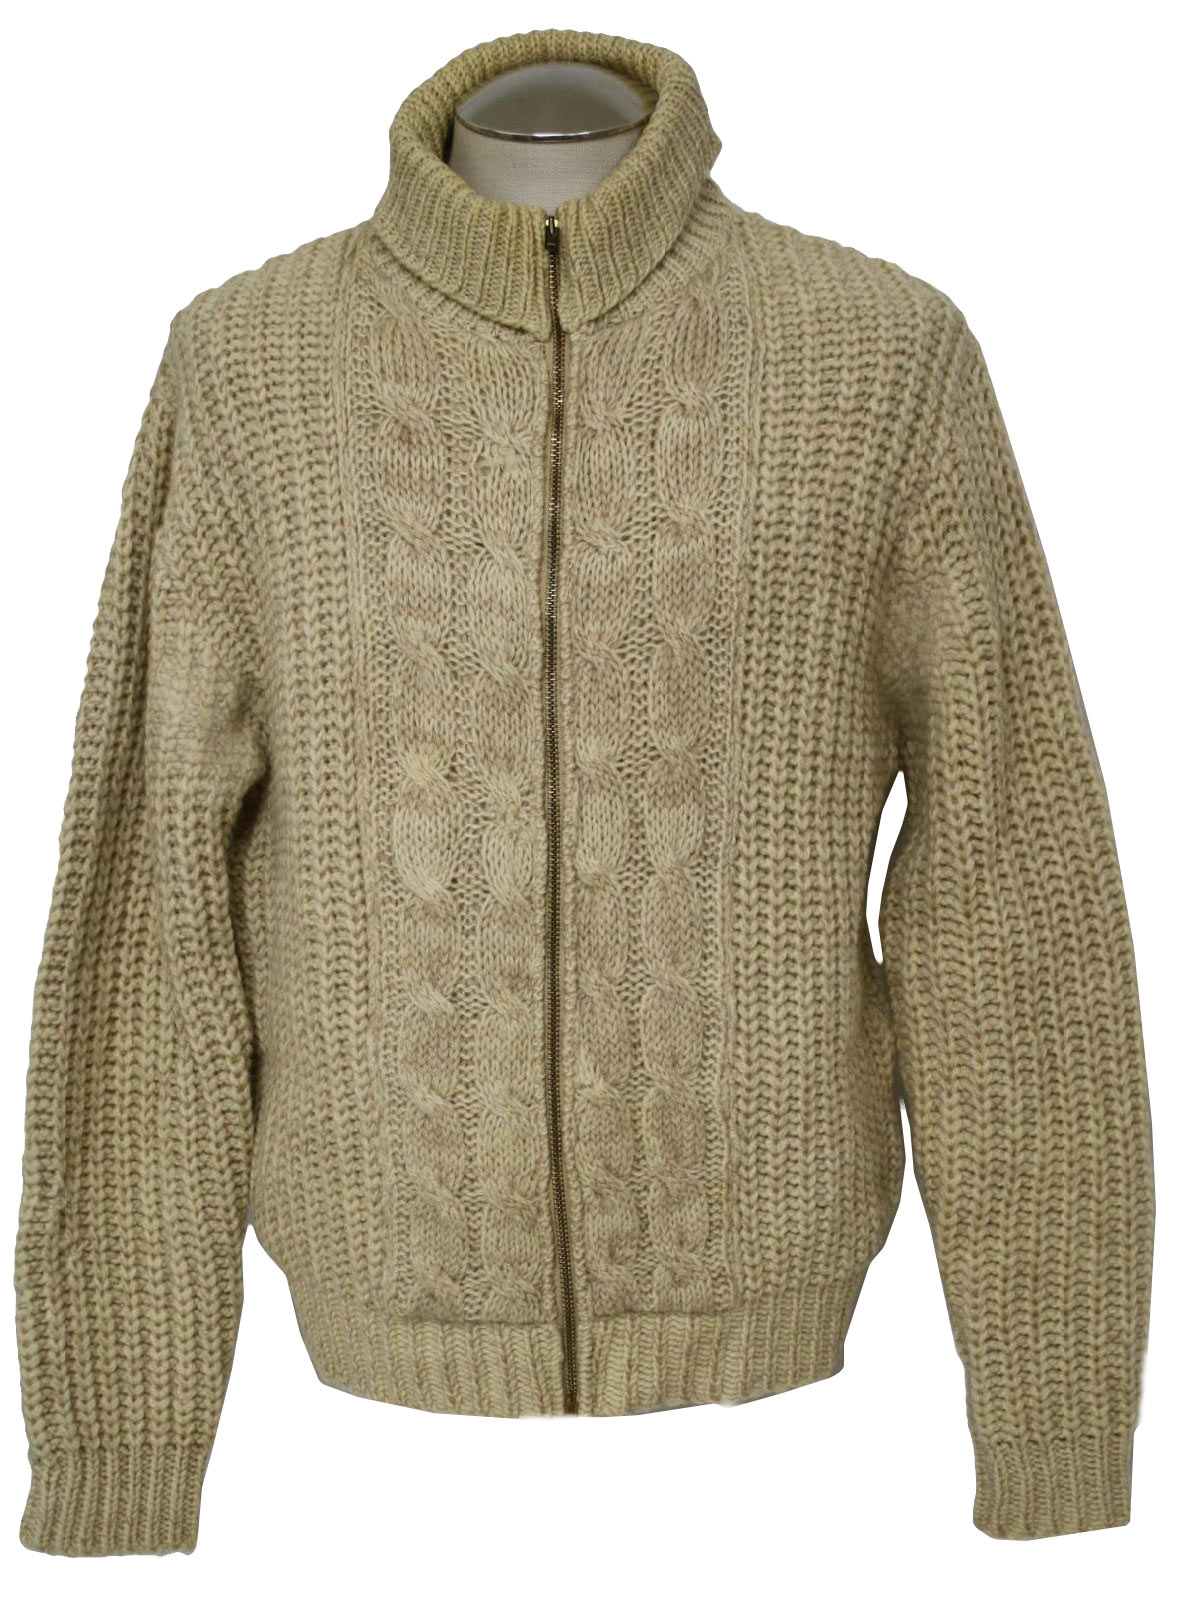 Vintage Jantzen 1970s Caridgan Sweater: 70s -Jantzen- Mens wool ...